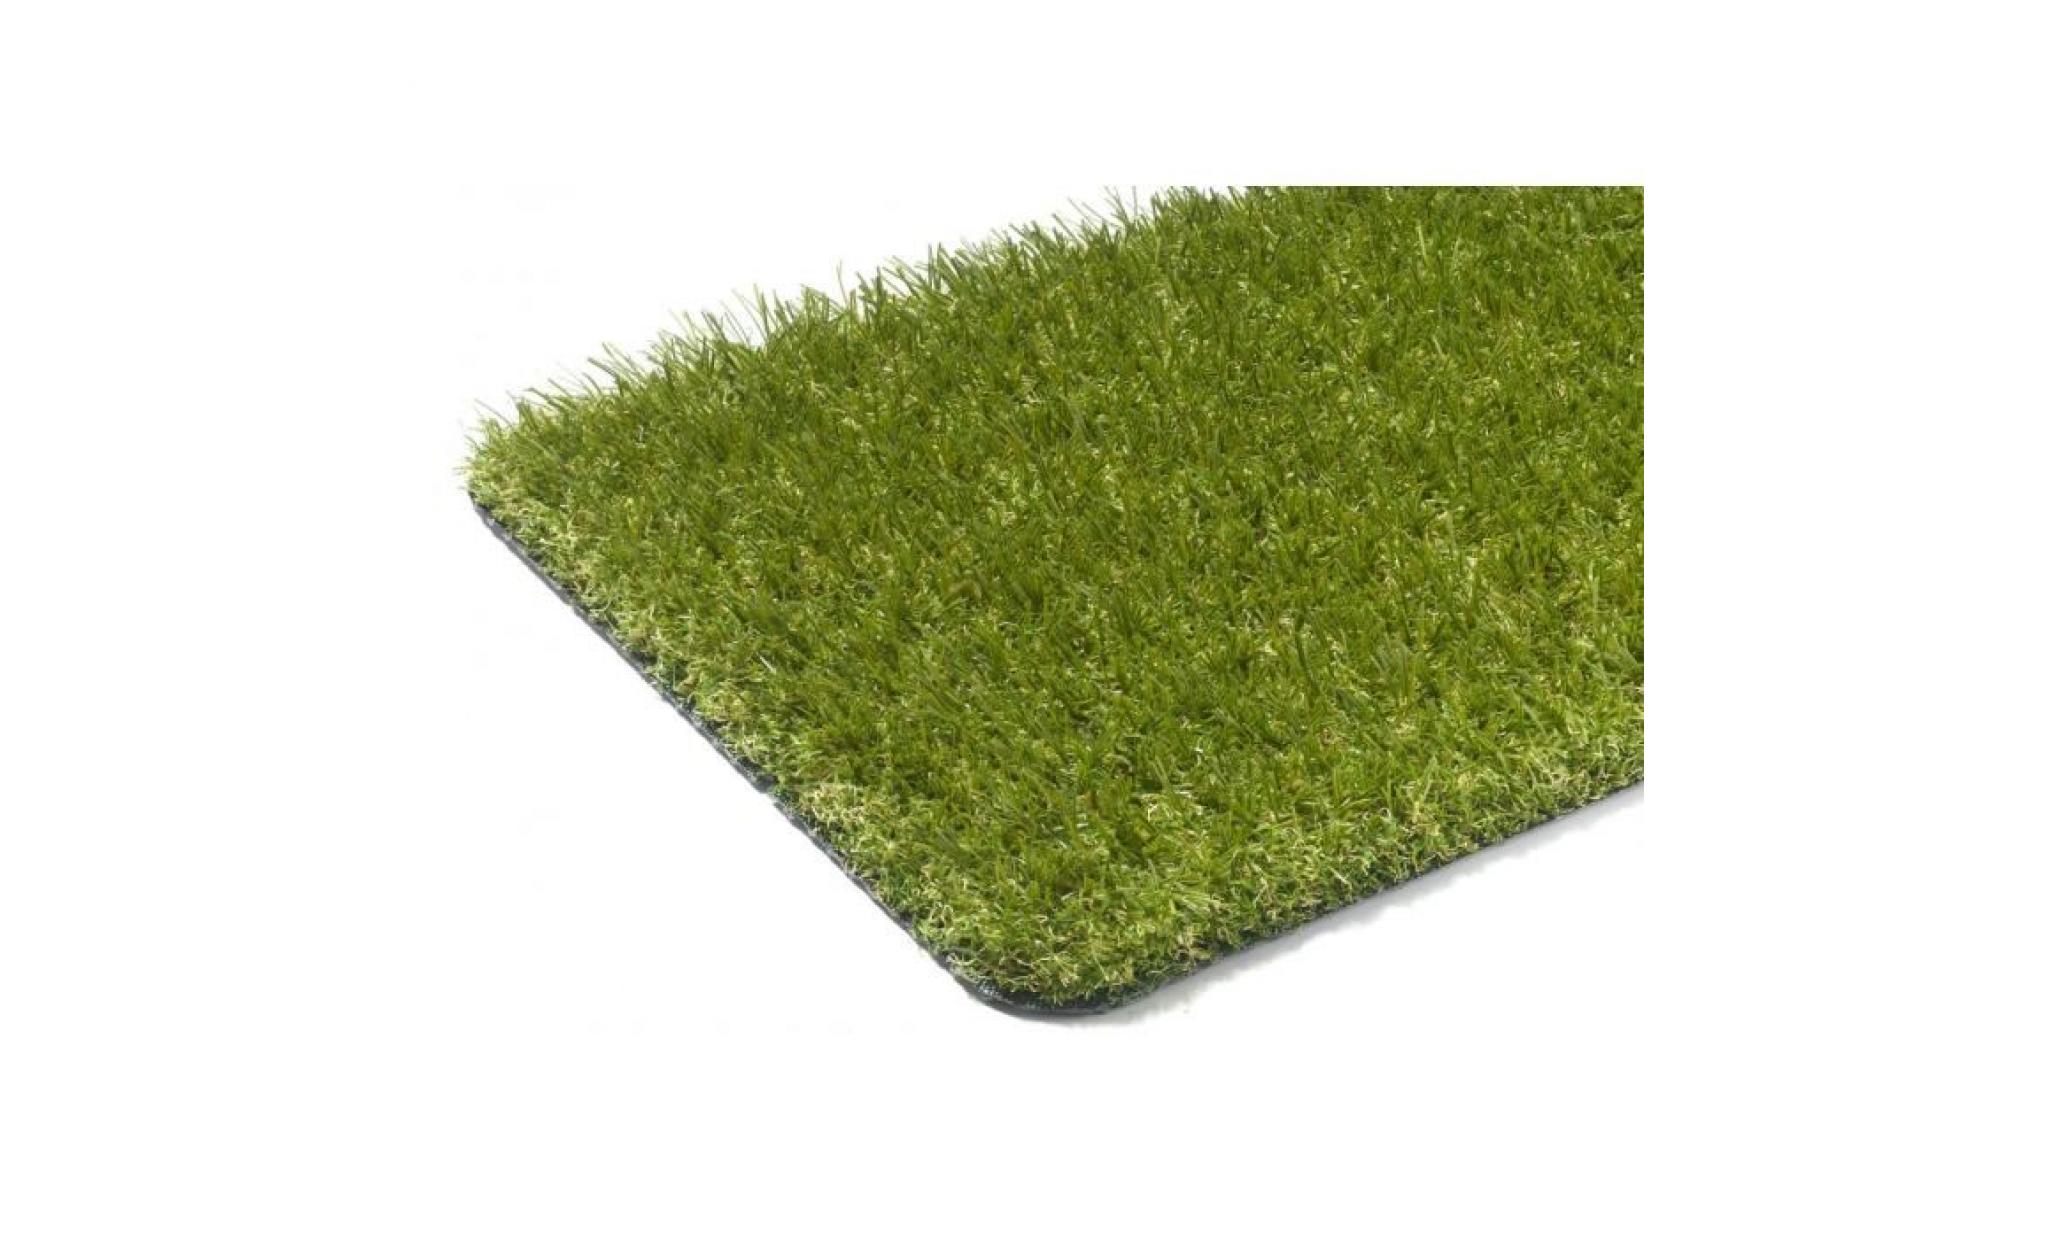 wembley   tapis type luxe gazon artificiel – pour jardin, terrasse, balcon   vert  [200x450 cm]